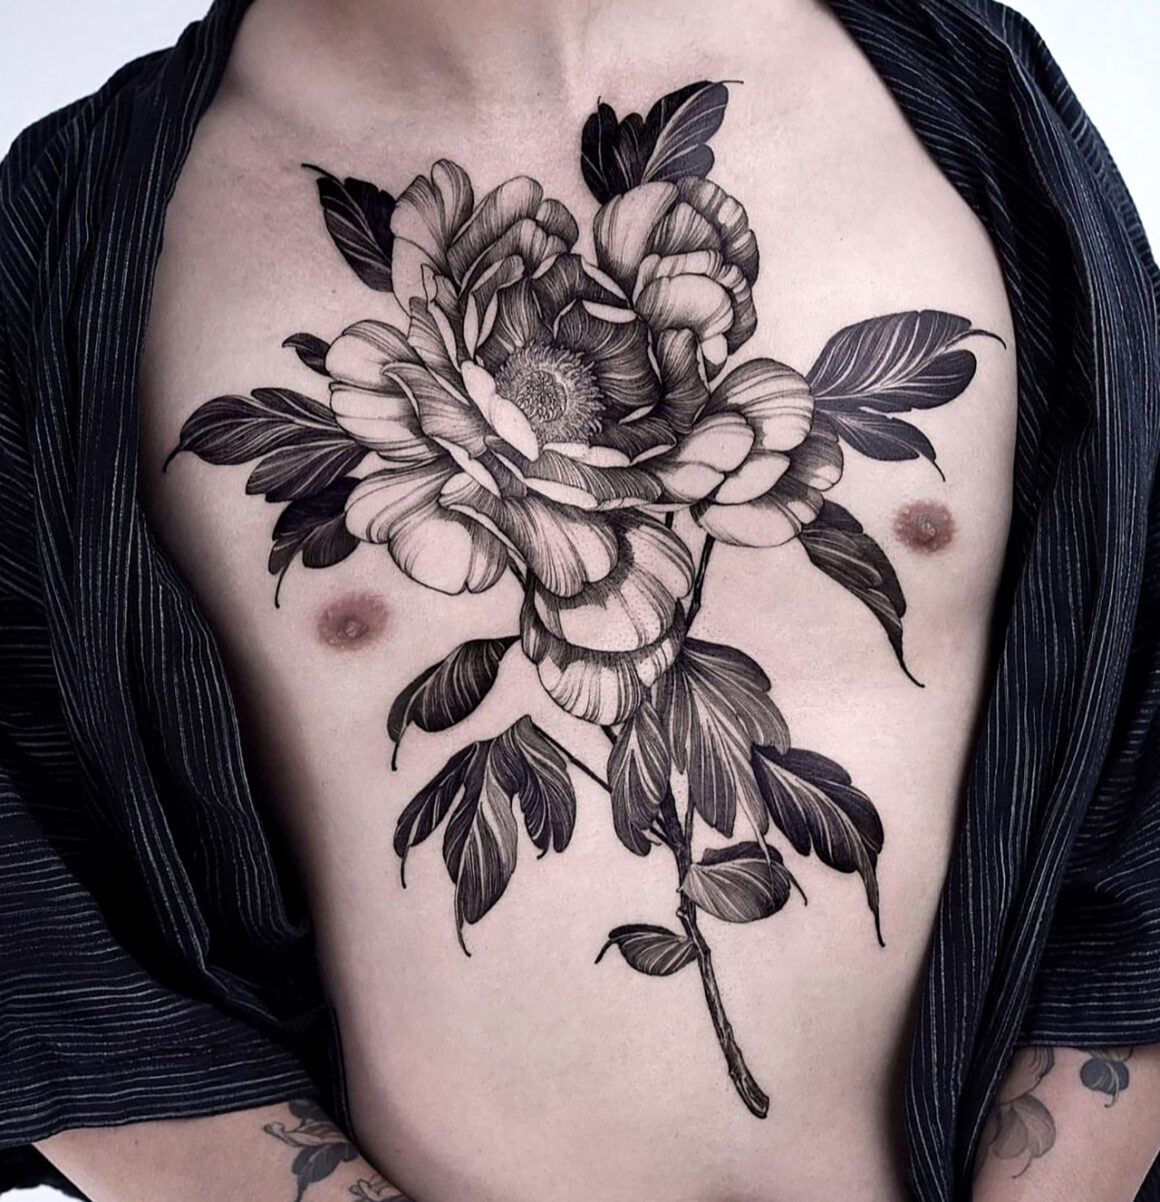 Tattoo by Kubrick Ho, @kubrickgood